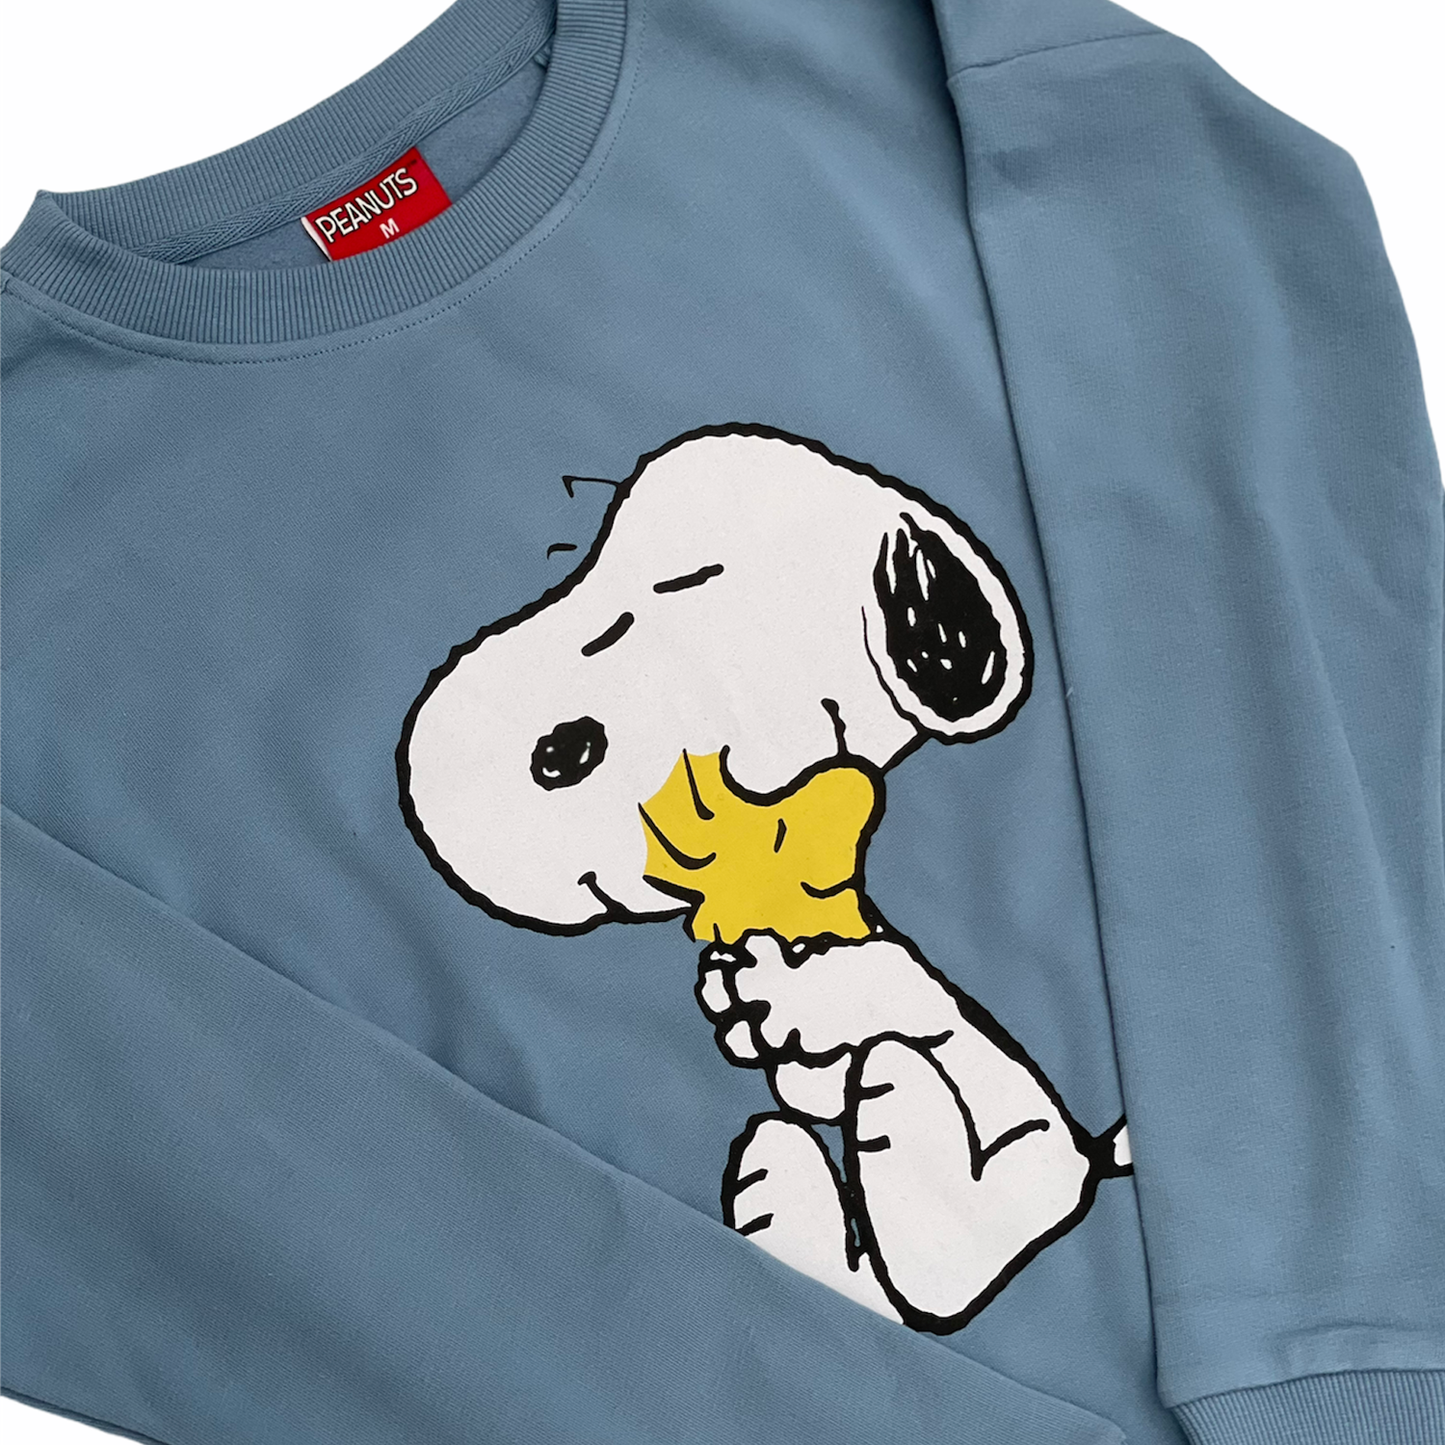 Peanuts - Snoopy & Woodstock Hug Women's Crew Sweat SS21